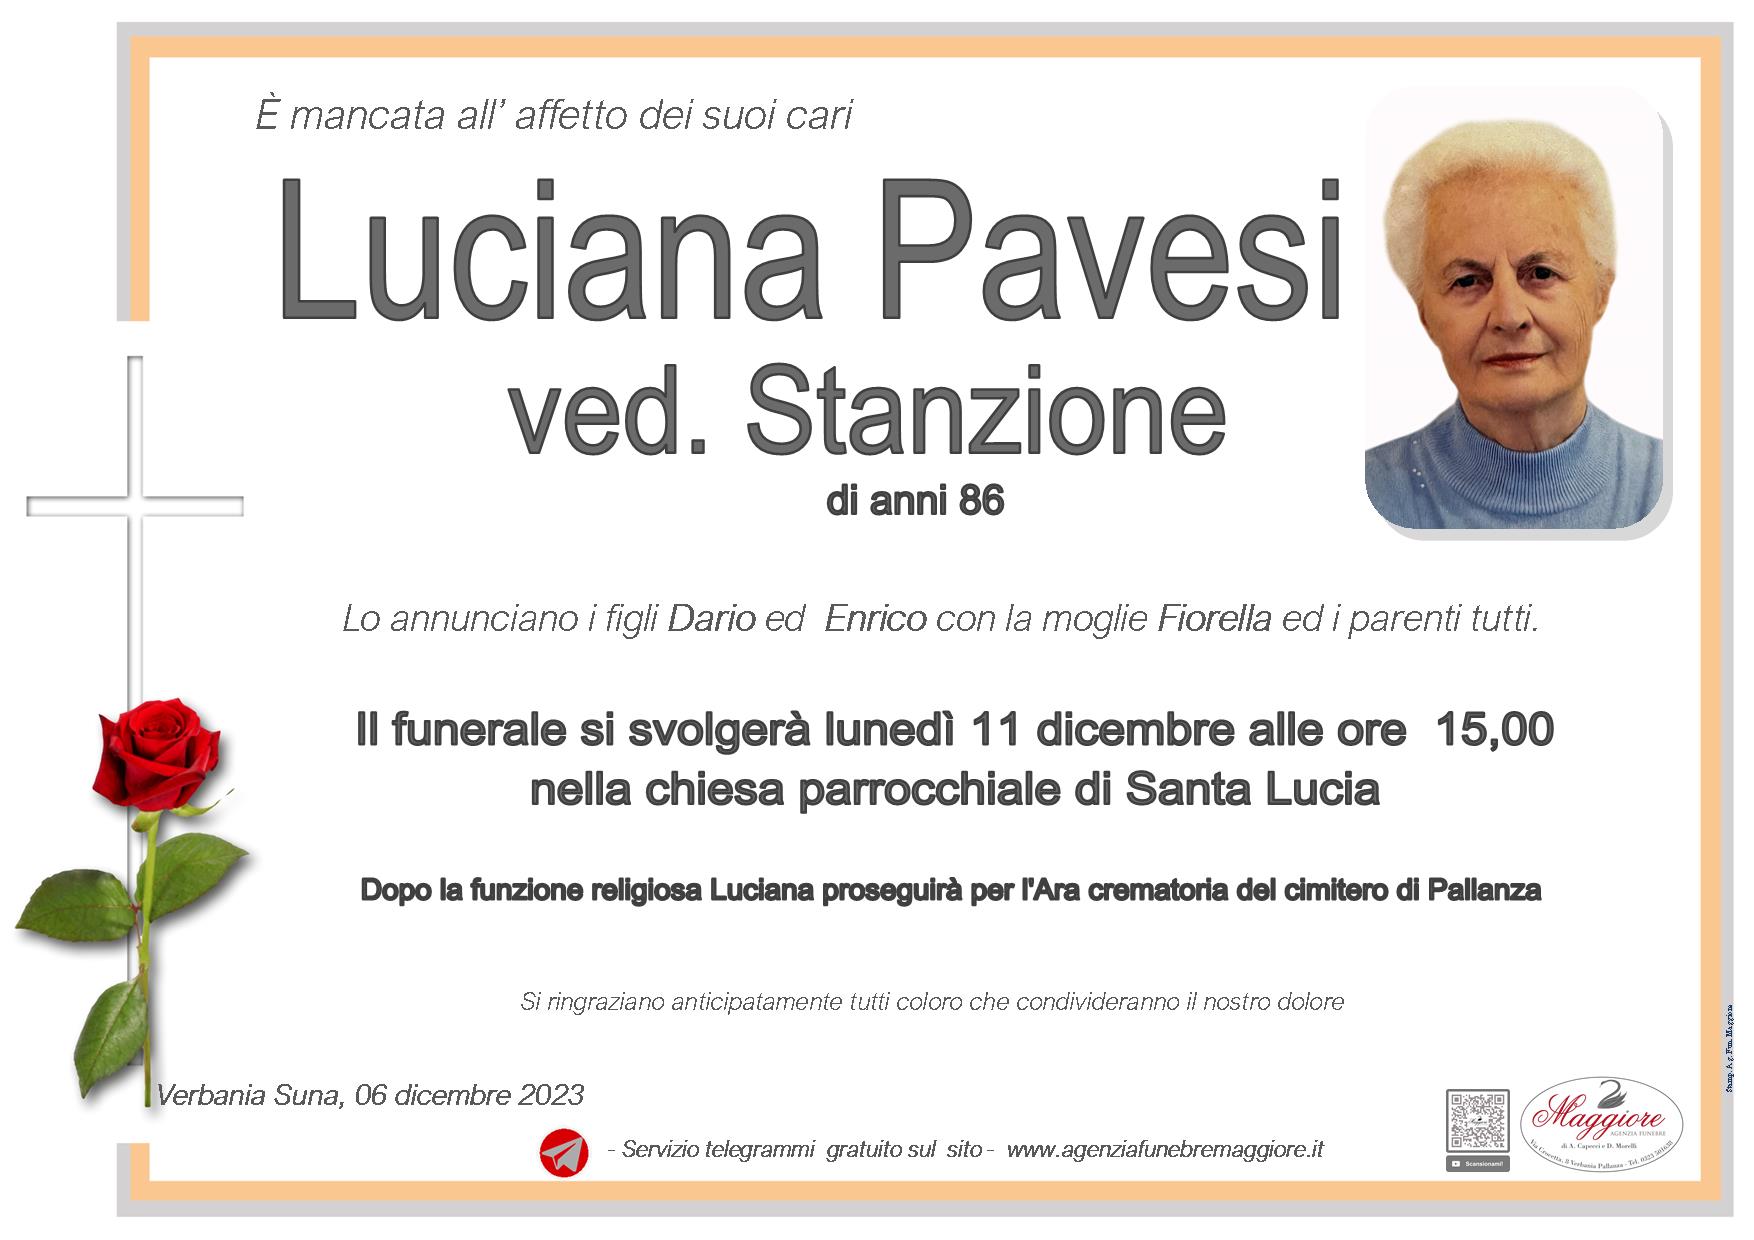 Luciana Pavesi ved. Stanzione